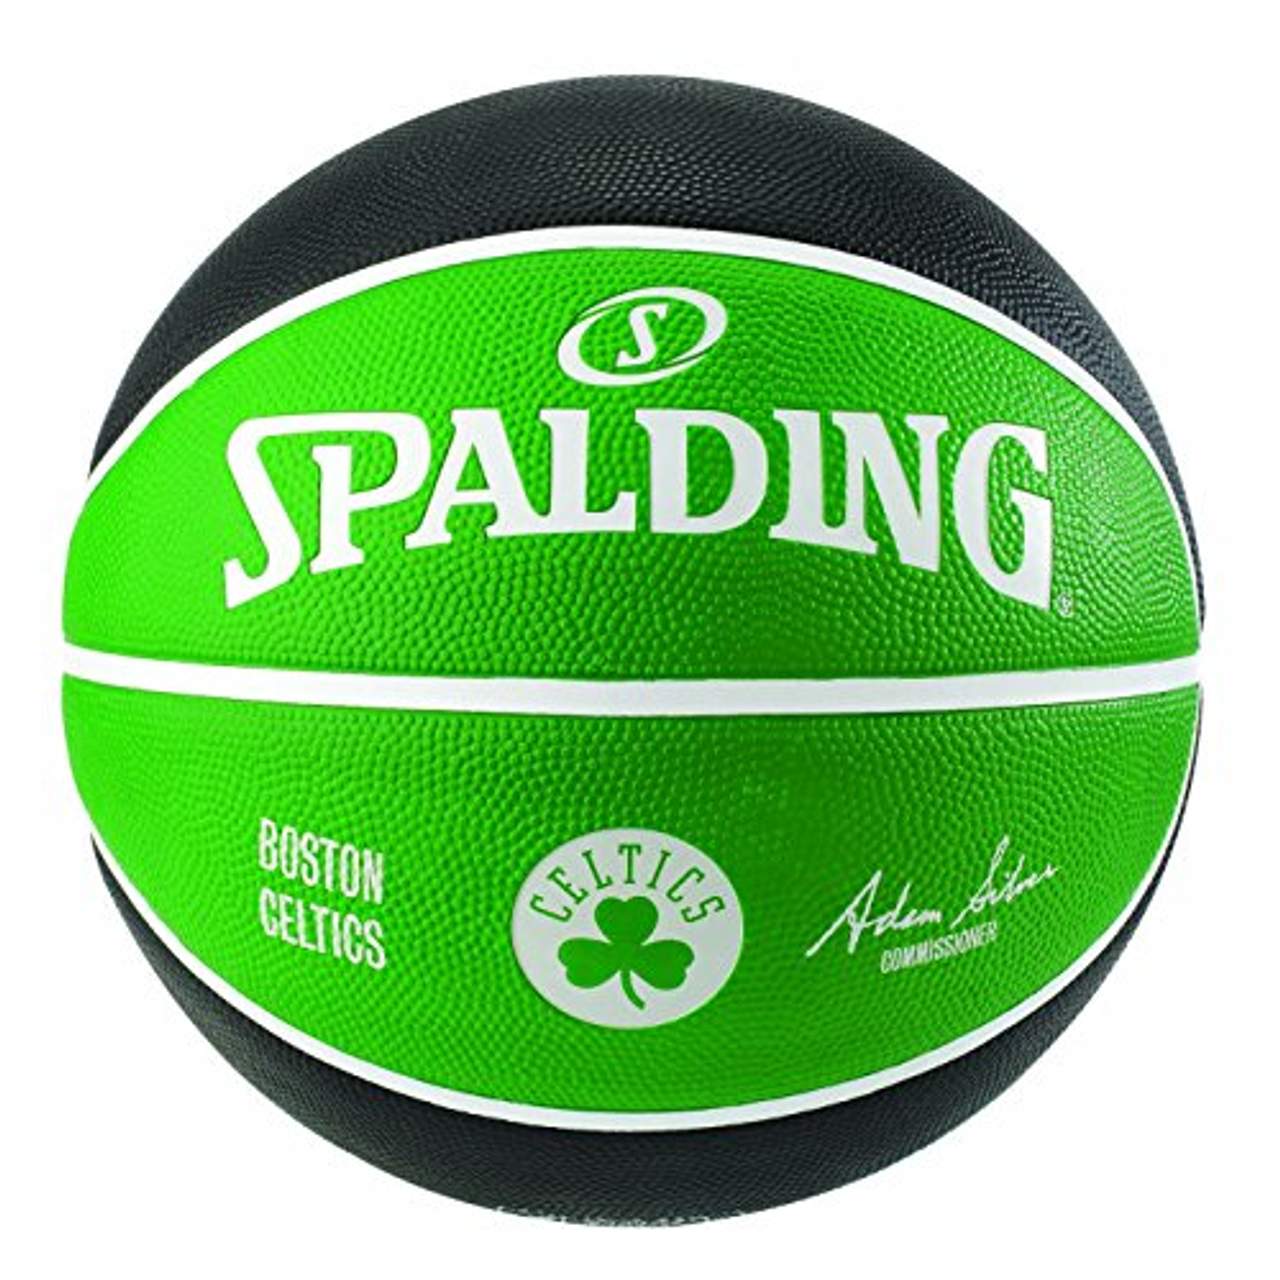 Spalding Unisex-Adult 3001587013417_7 Basketball